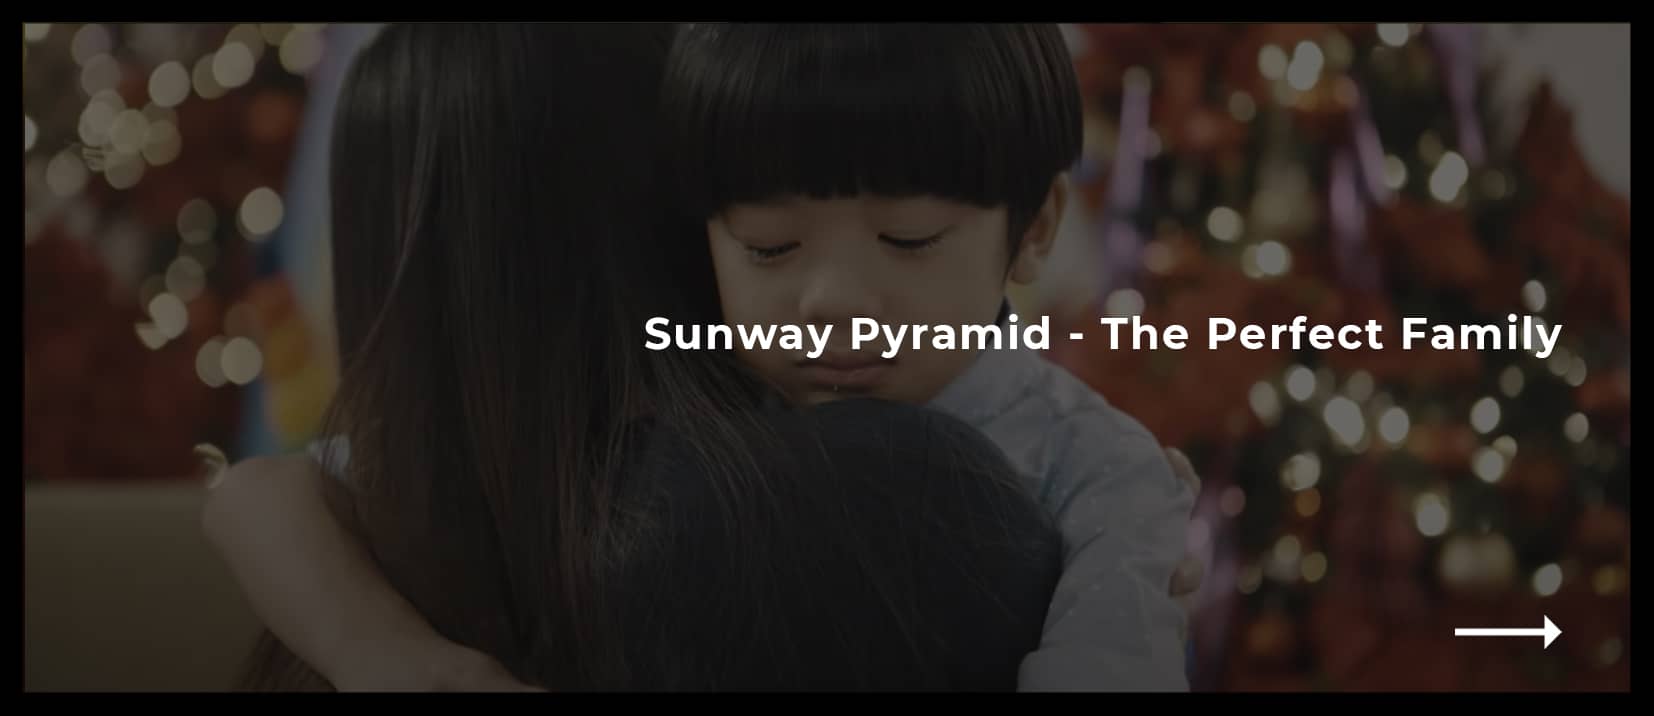 Sunway Pyramid - The Perfect Family